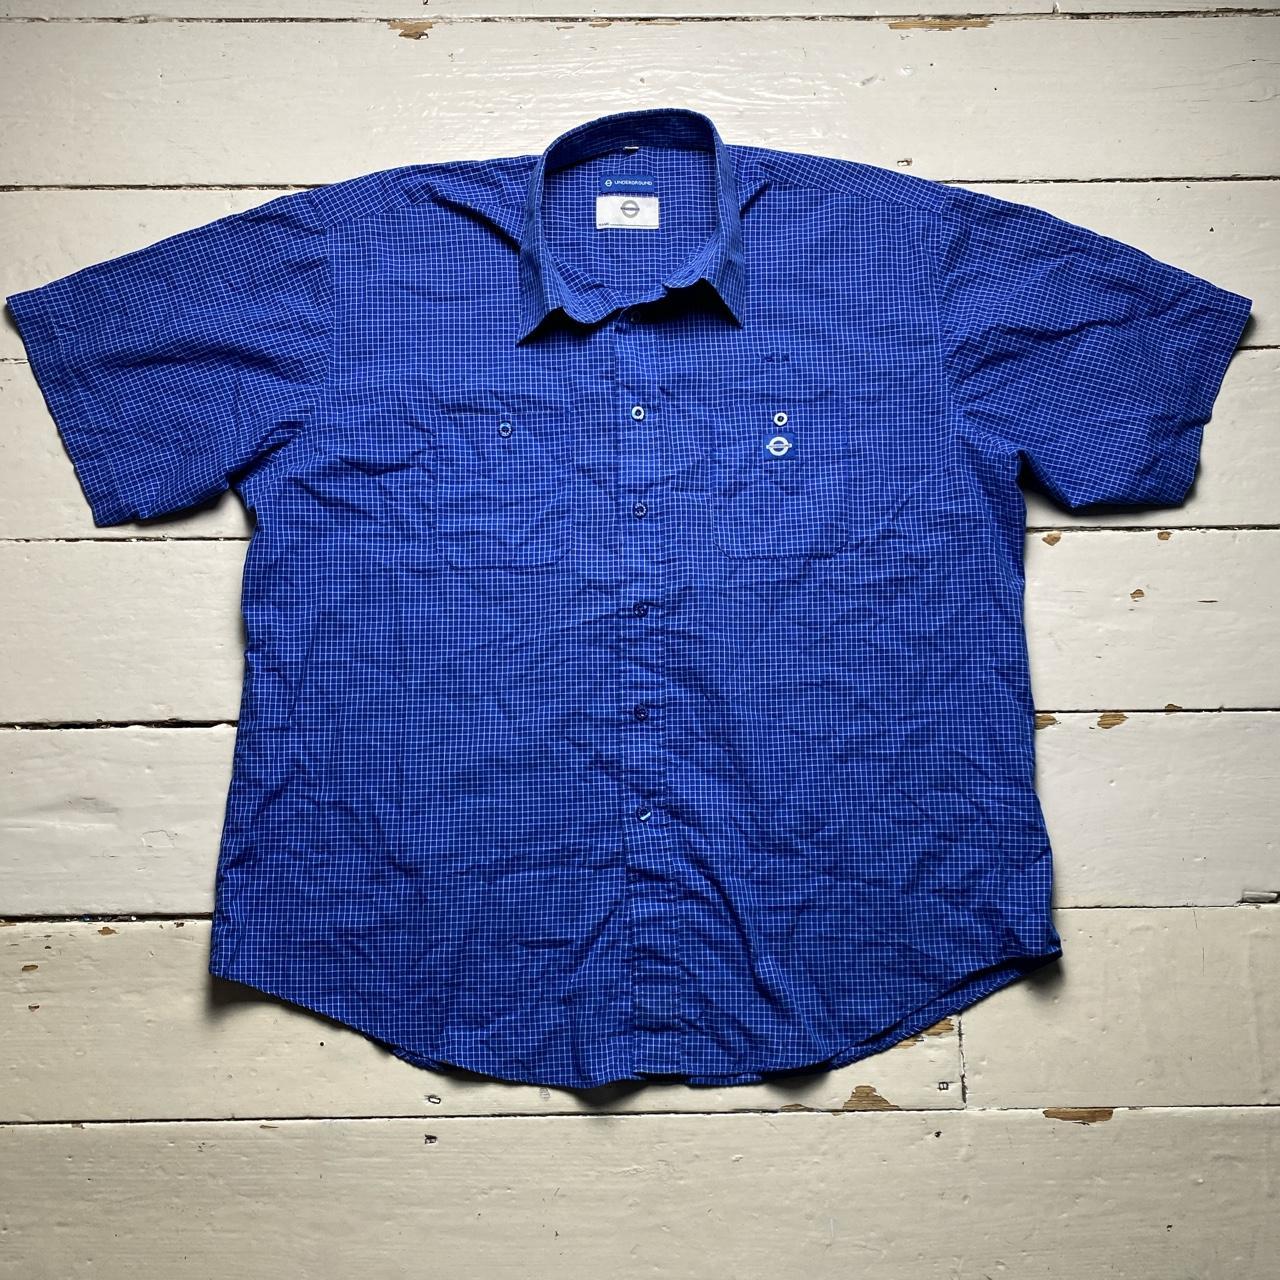 London Underground Vintage 90’s Blue and White Grid Short Sleeve Shirt